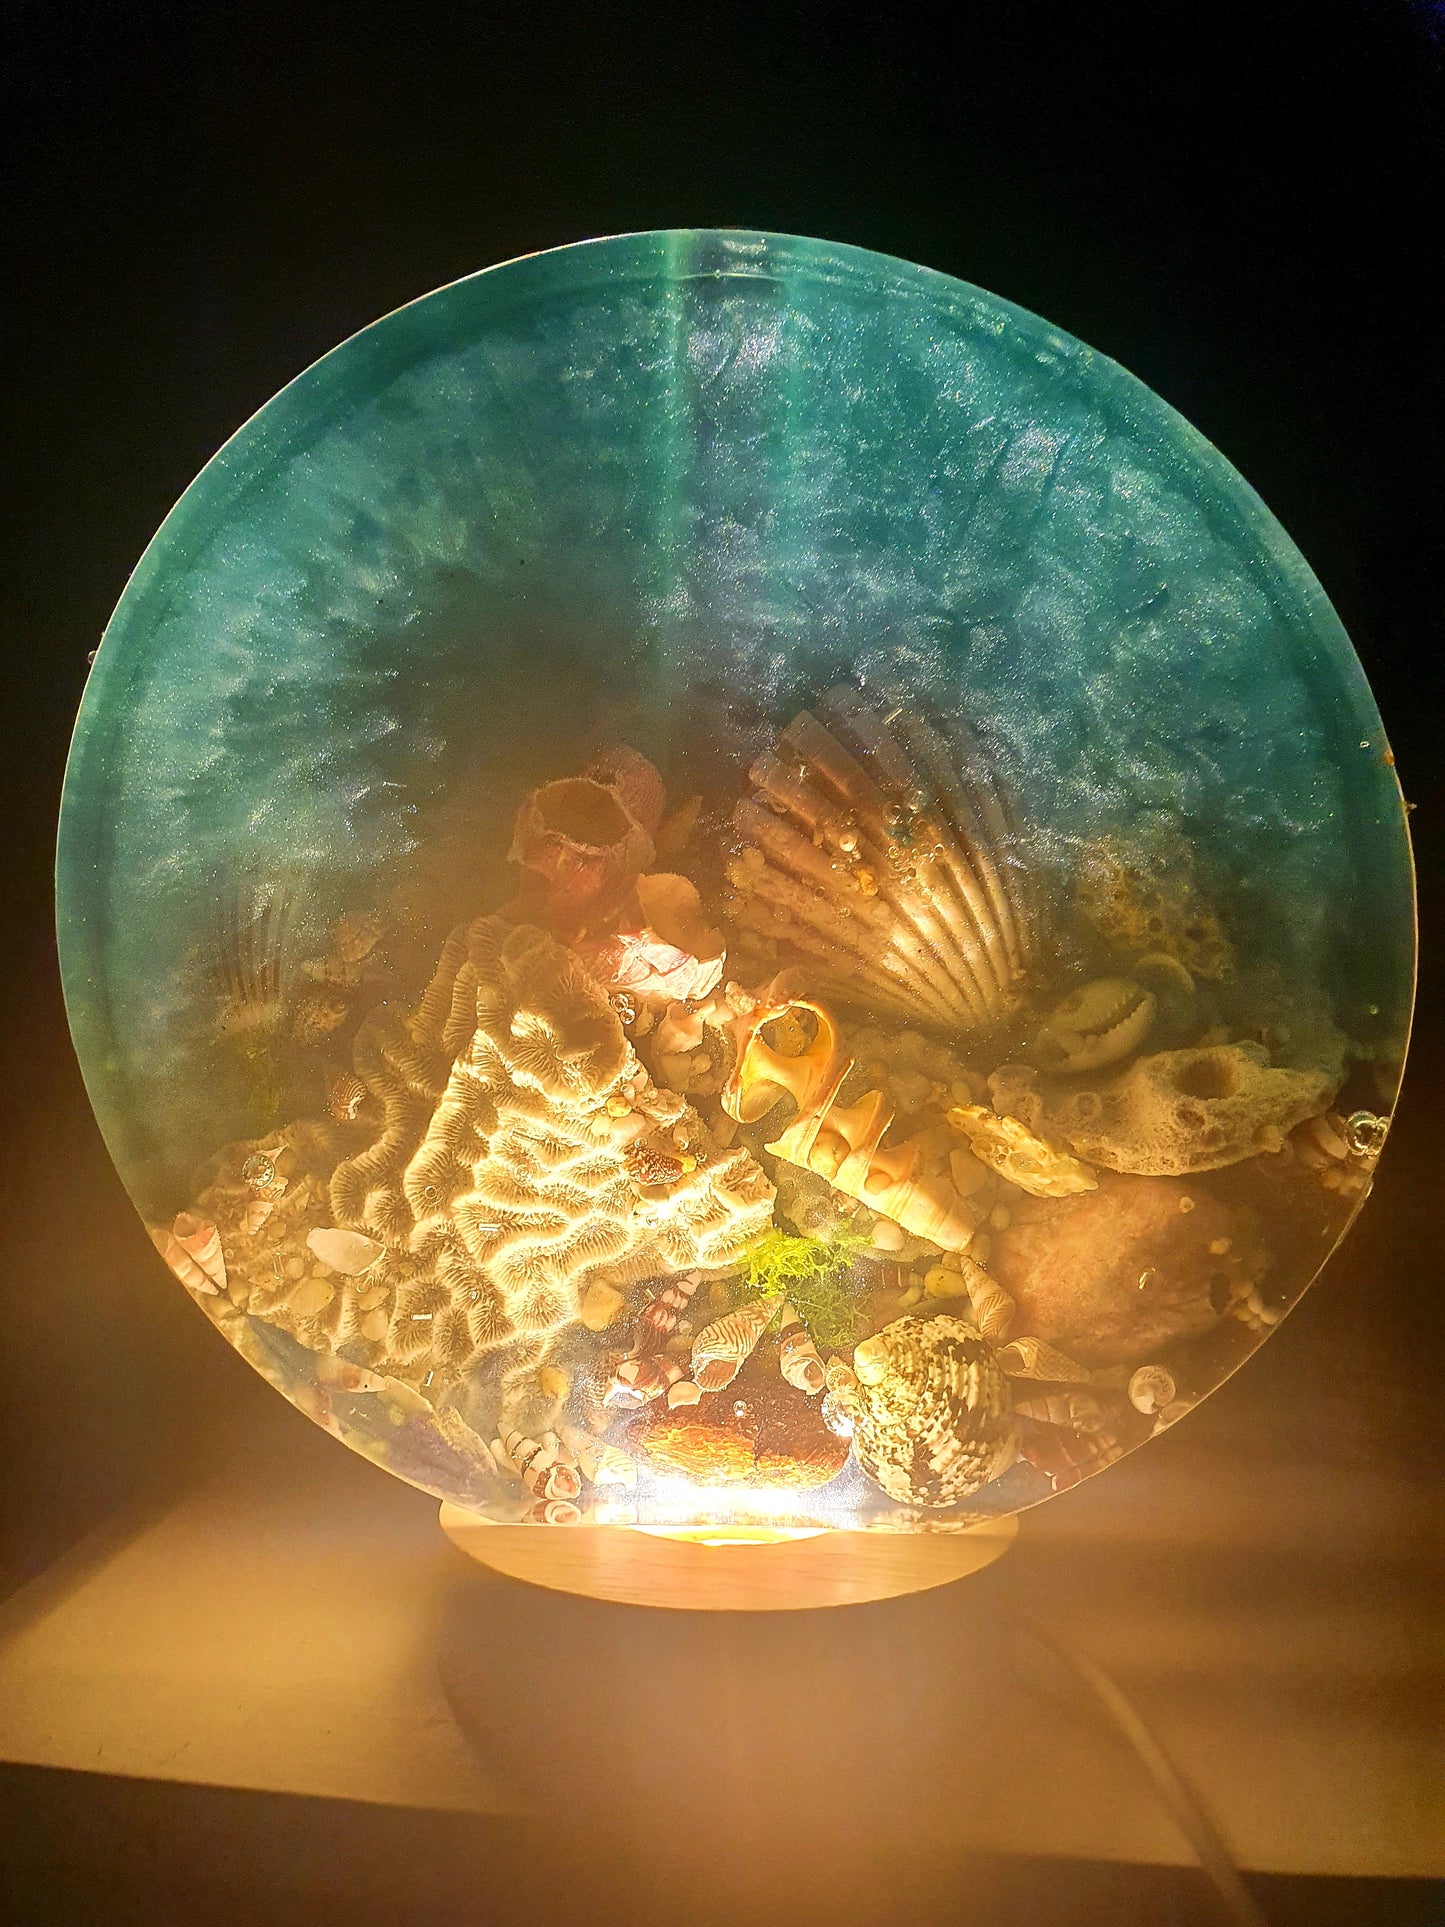 Celebrating the sea through functional art - sculpture/ vase/ lamp